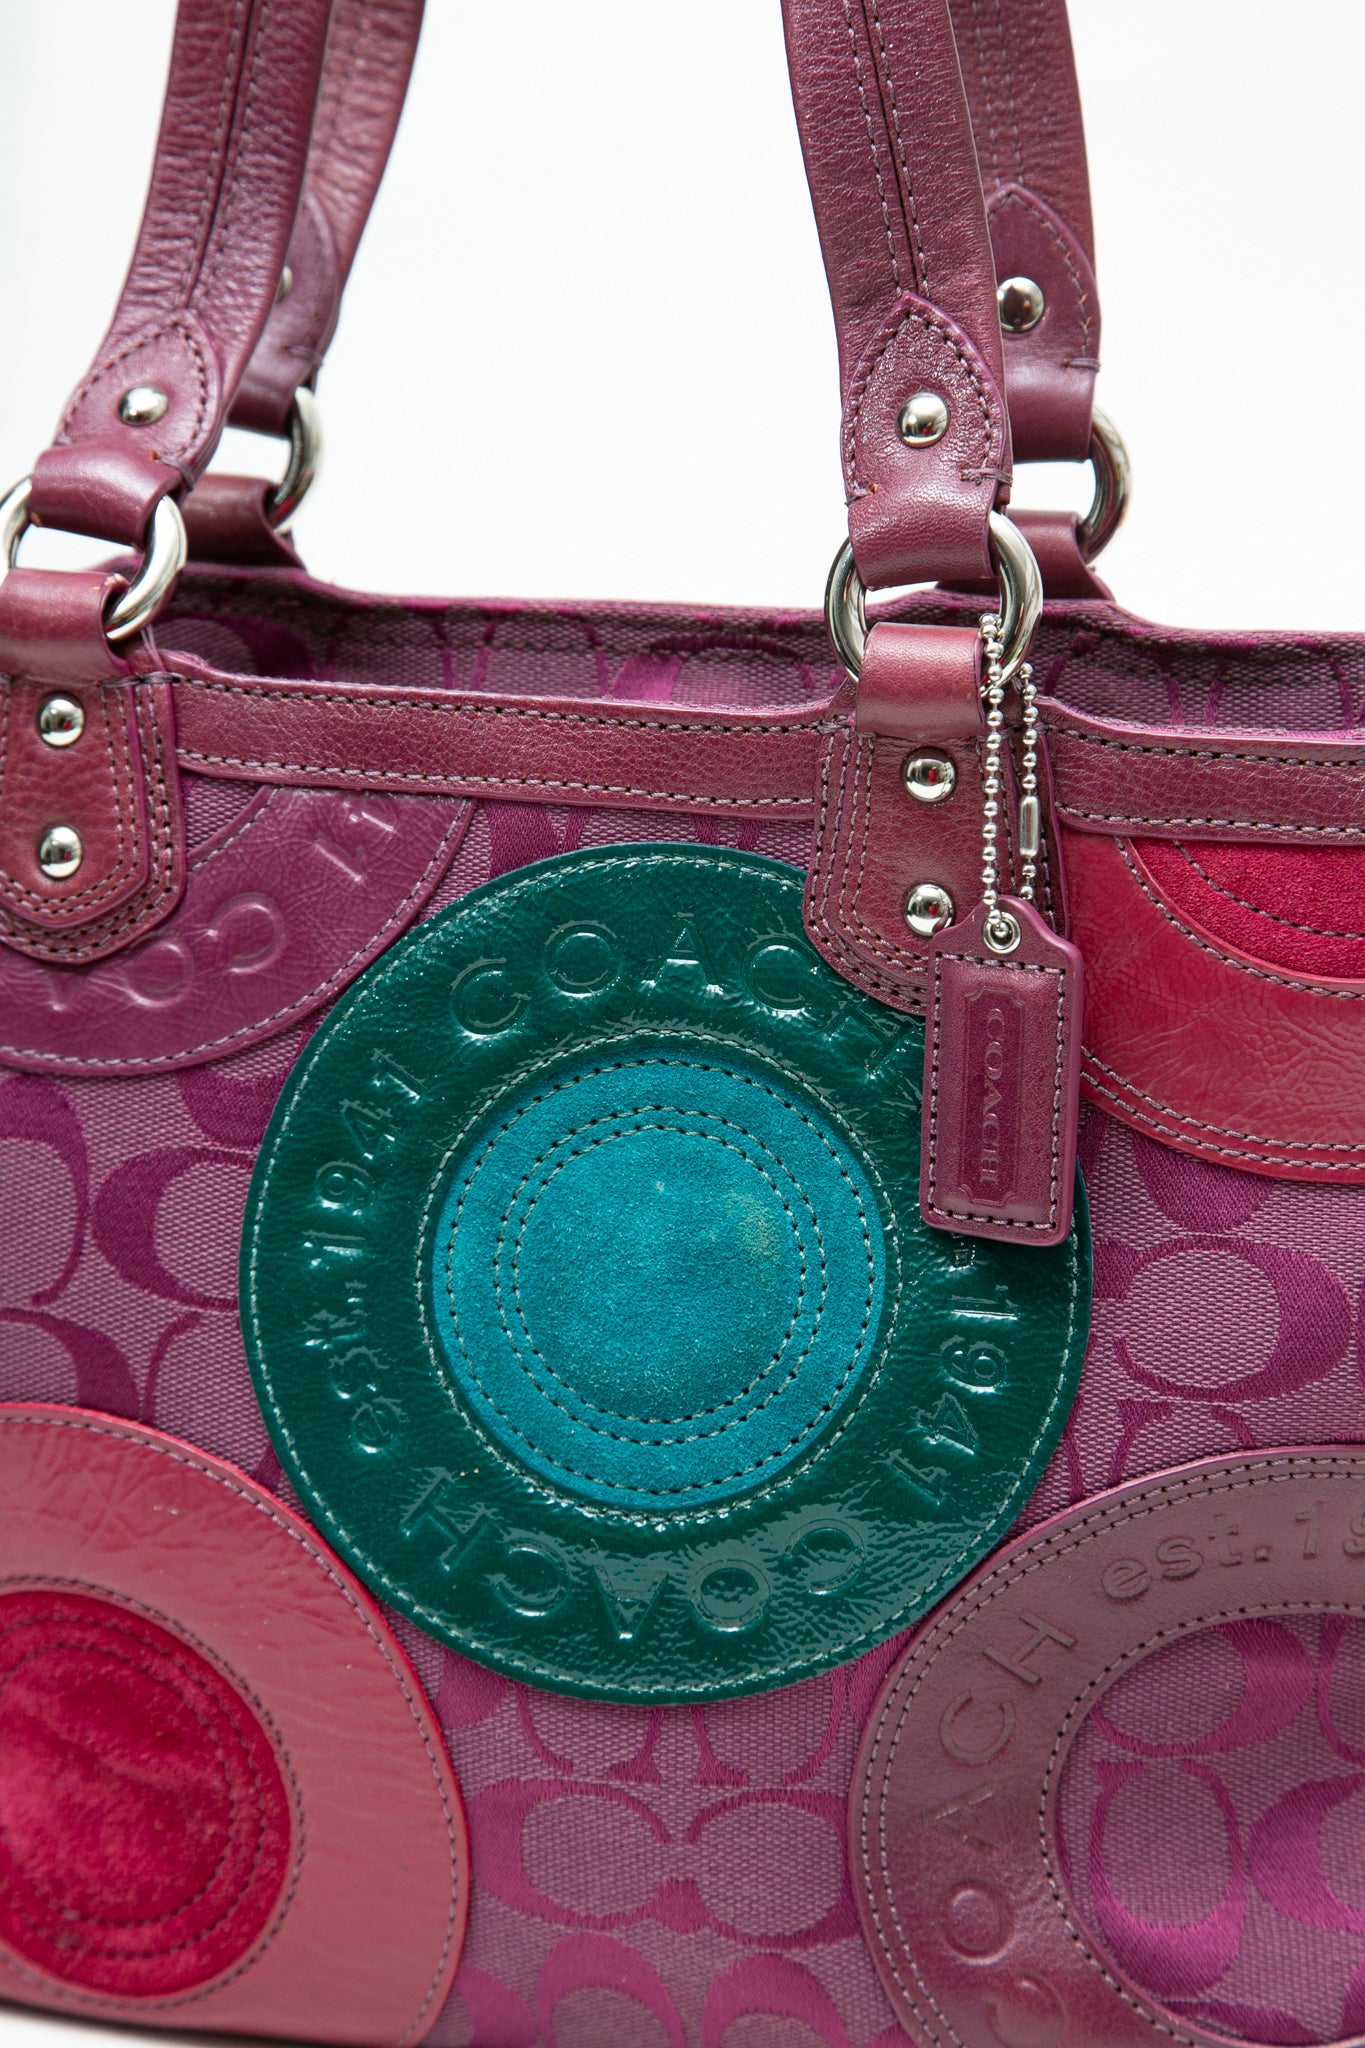 COACH Signature Leather Trim 3577 Shoulder Handbag Purse Tan | eBay